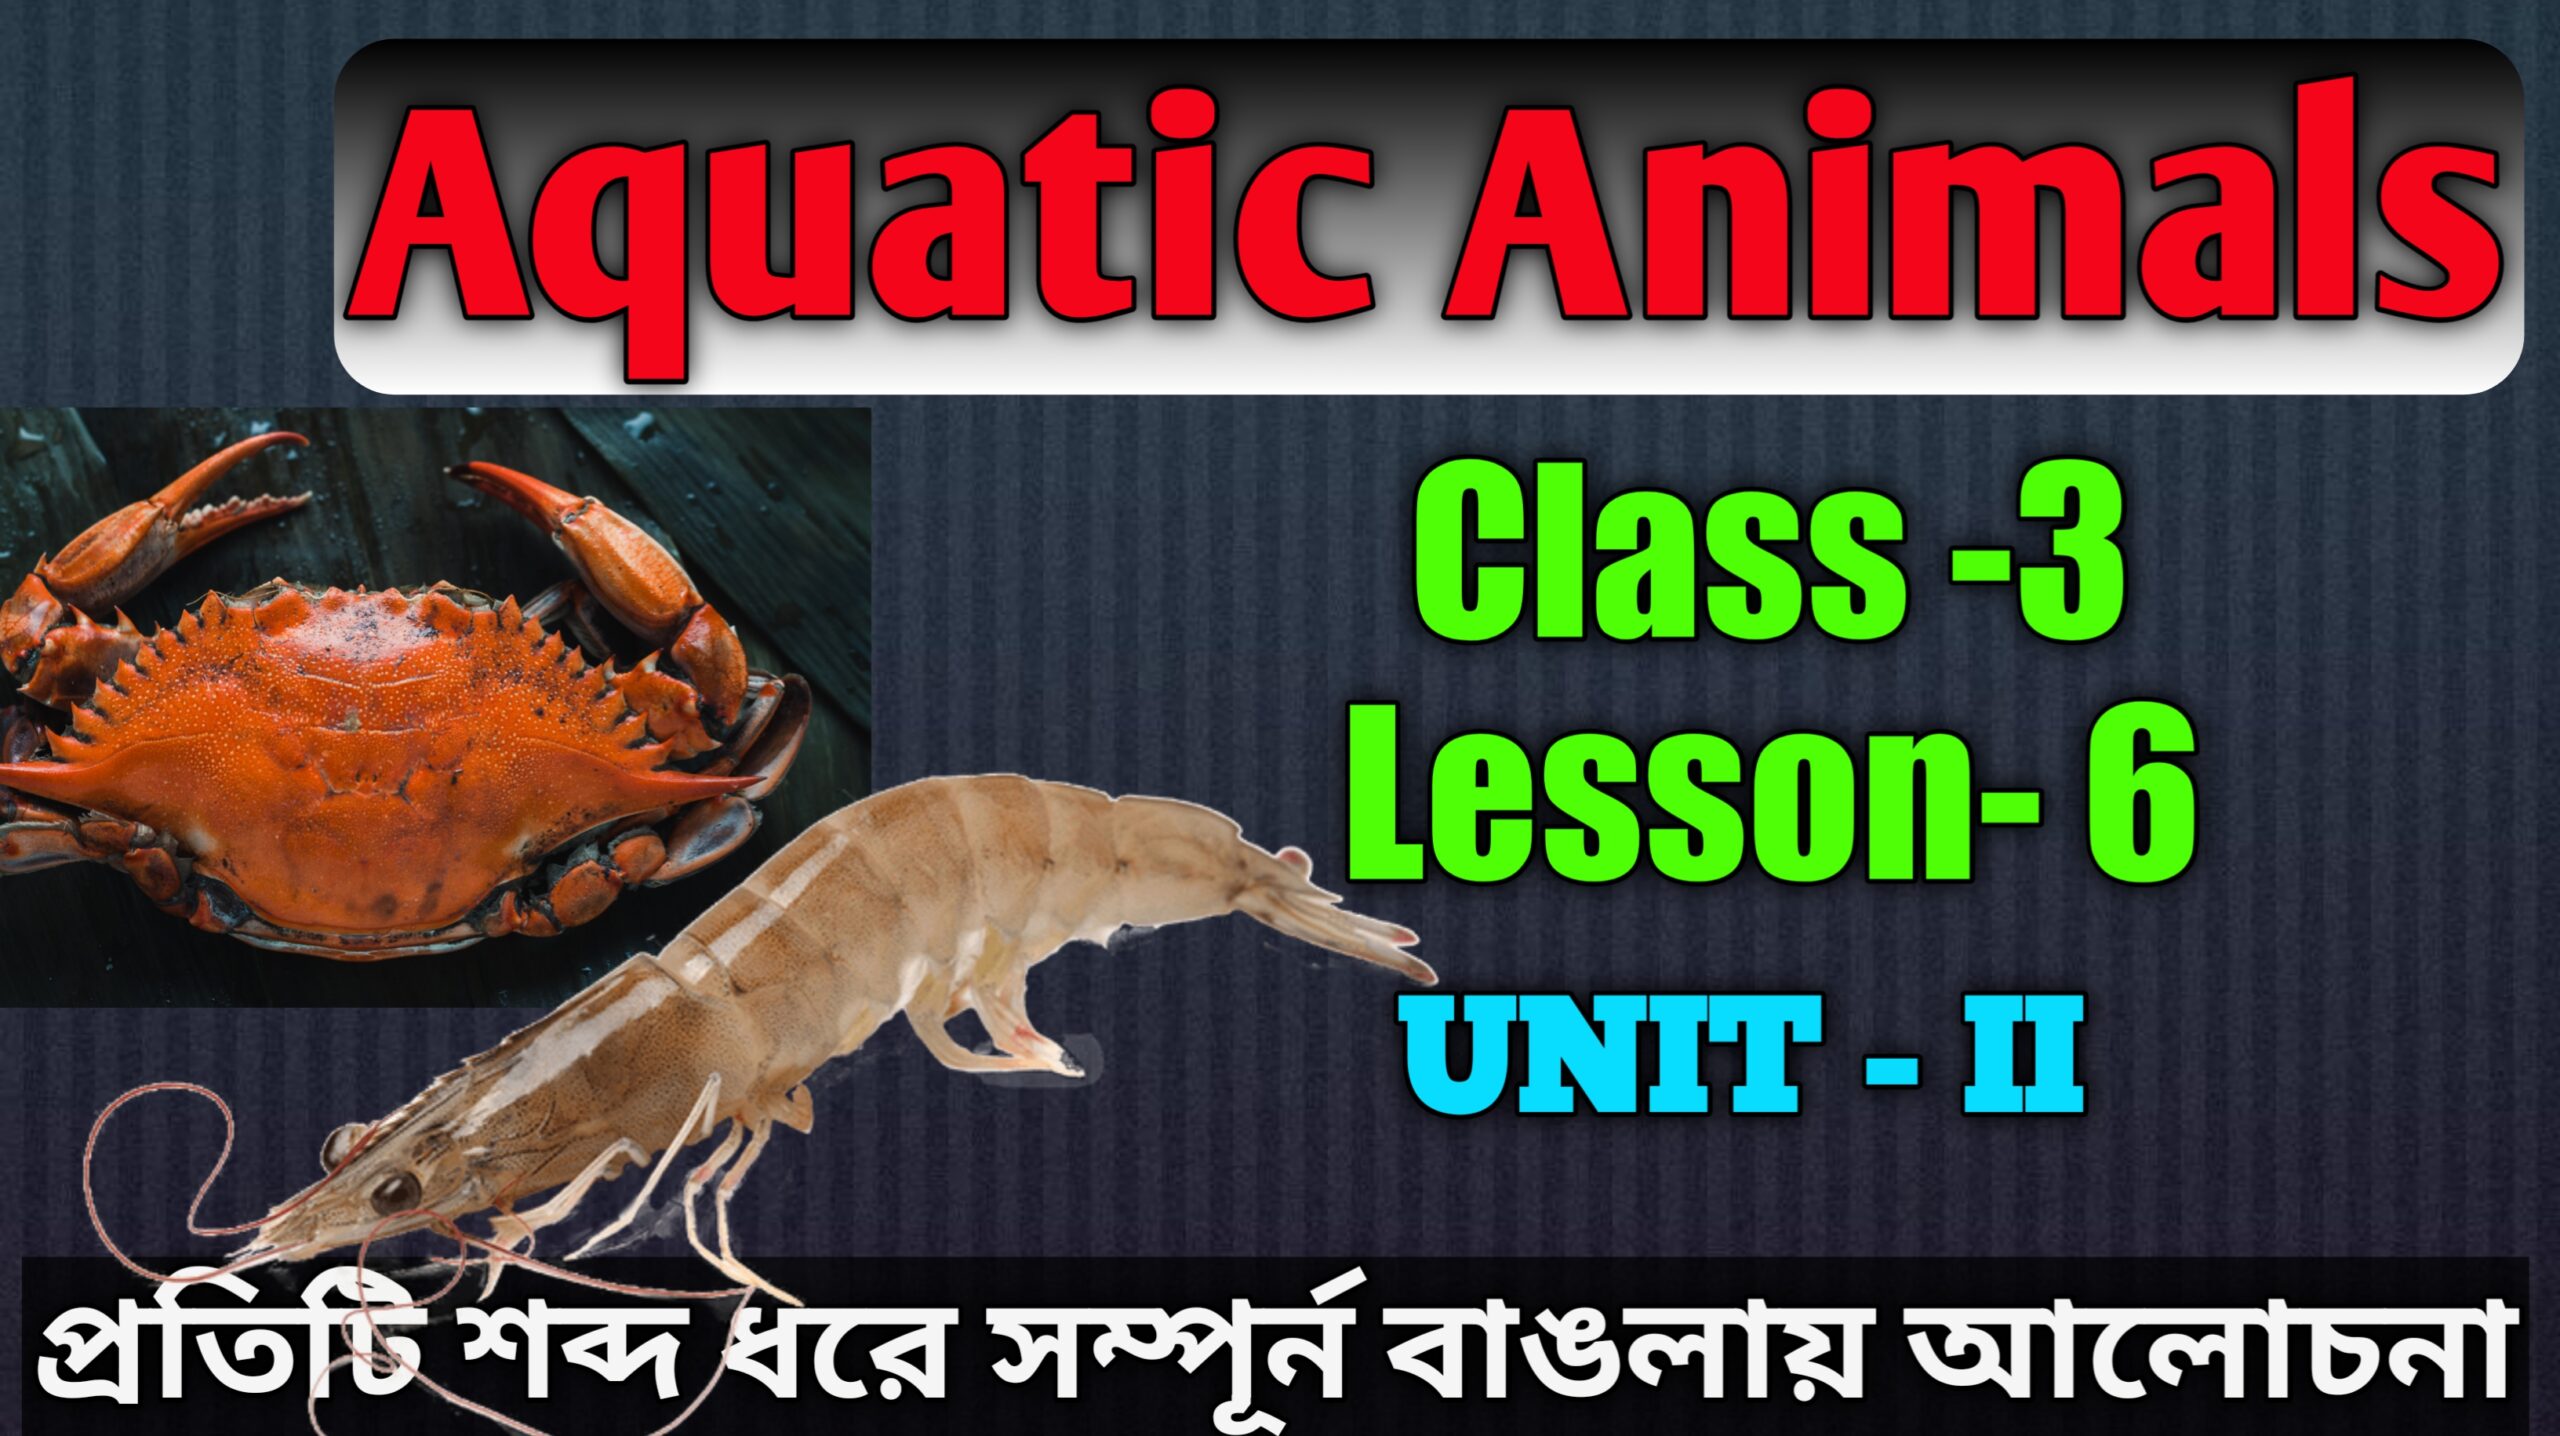 Aquatic Animals Bengali Meaning Class 3 Lesson 6 Unit II - Study Solves